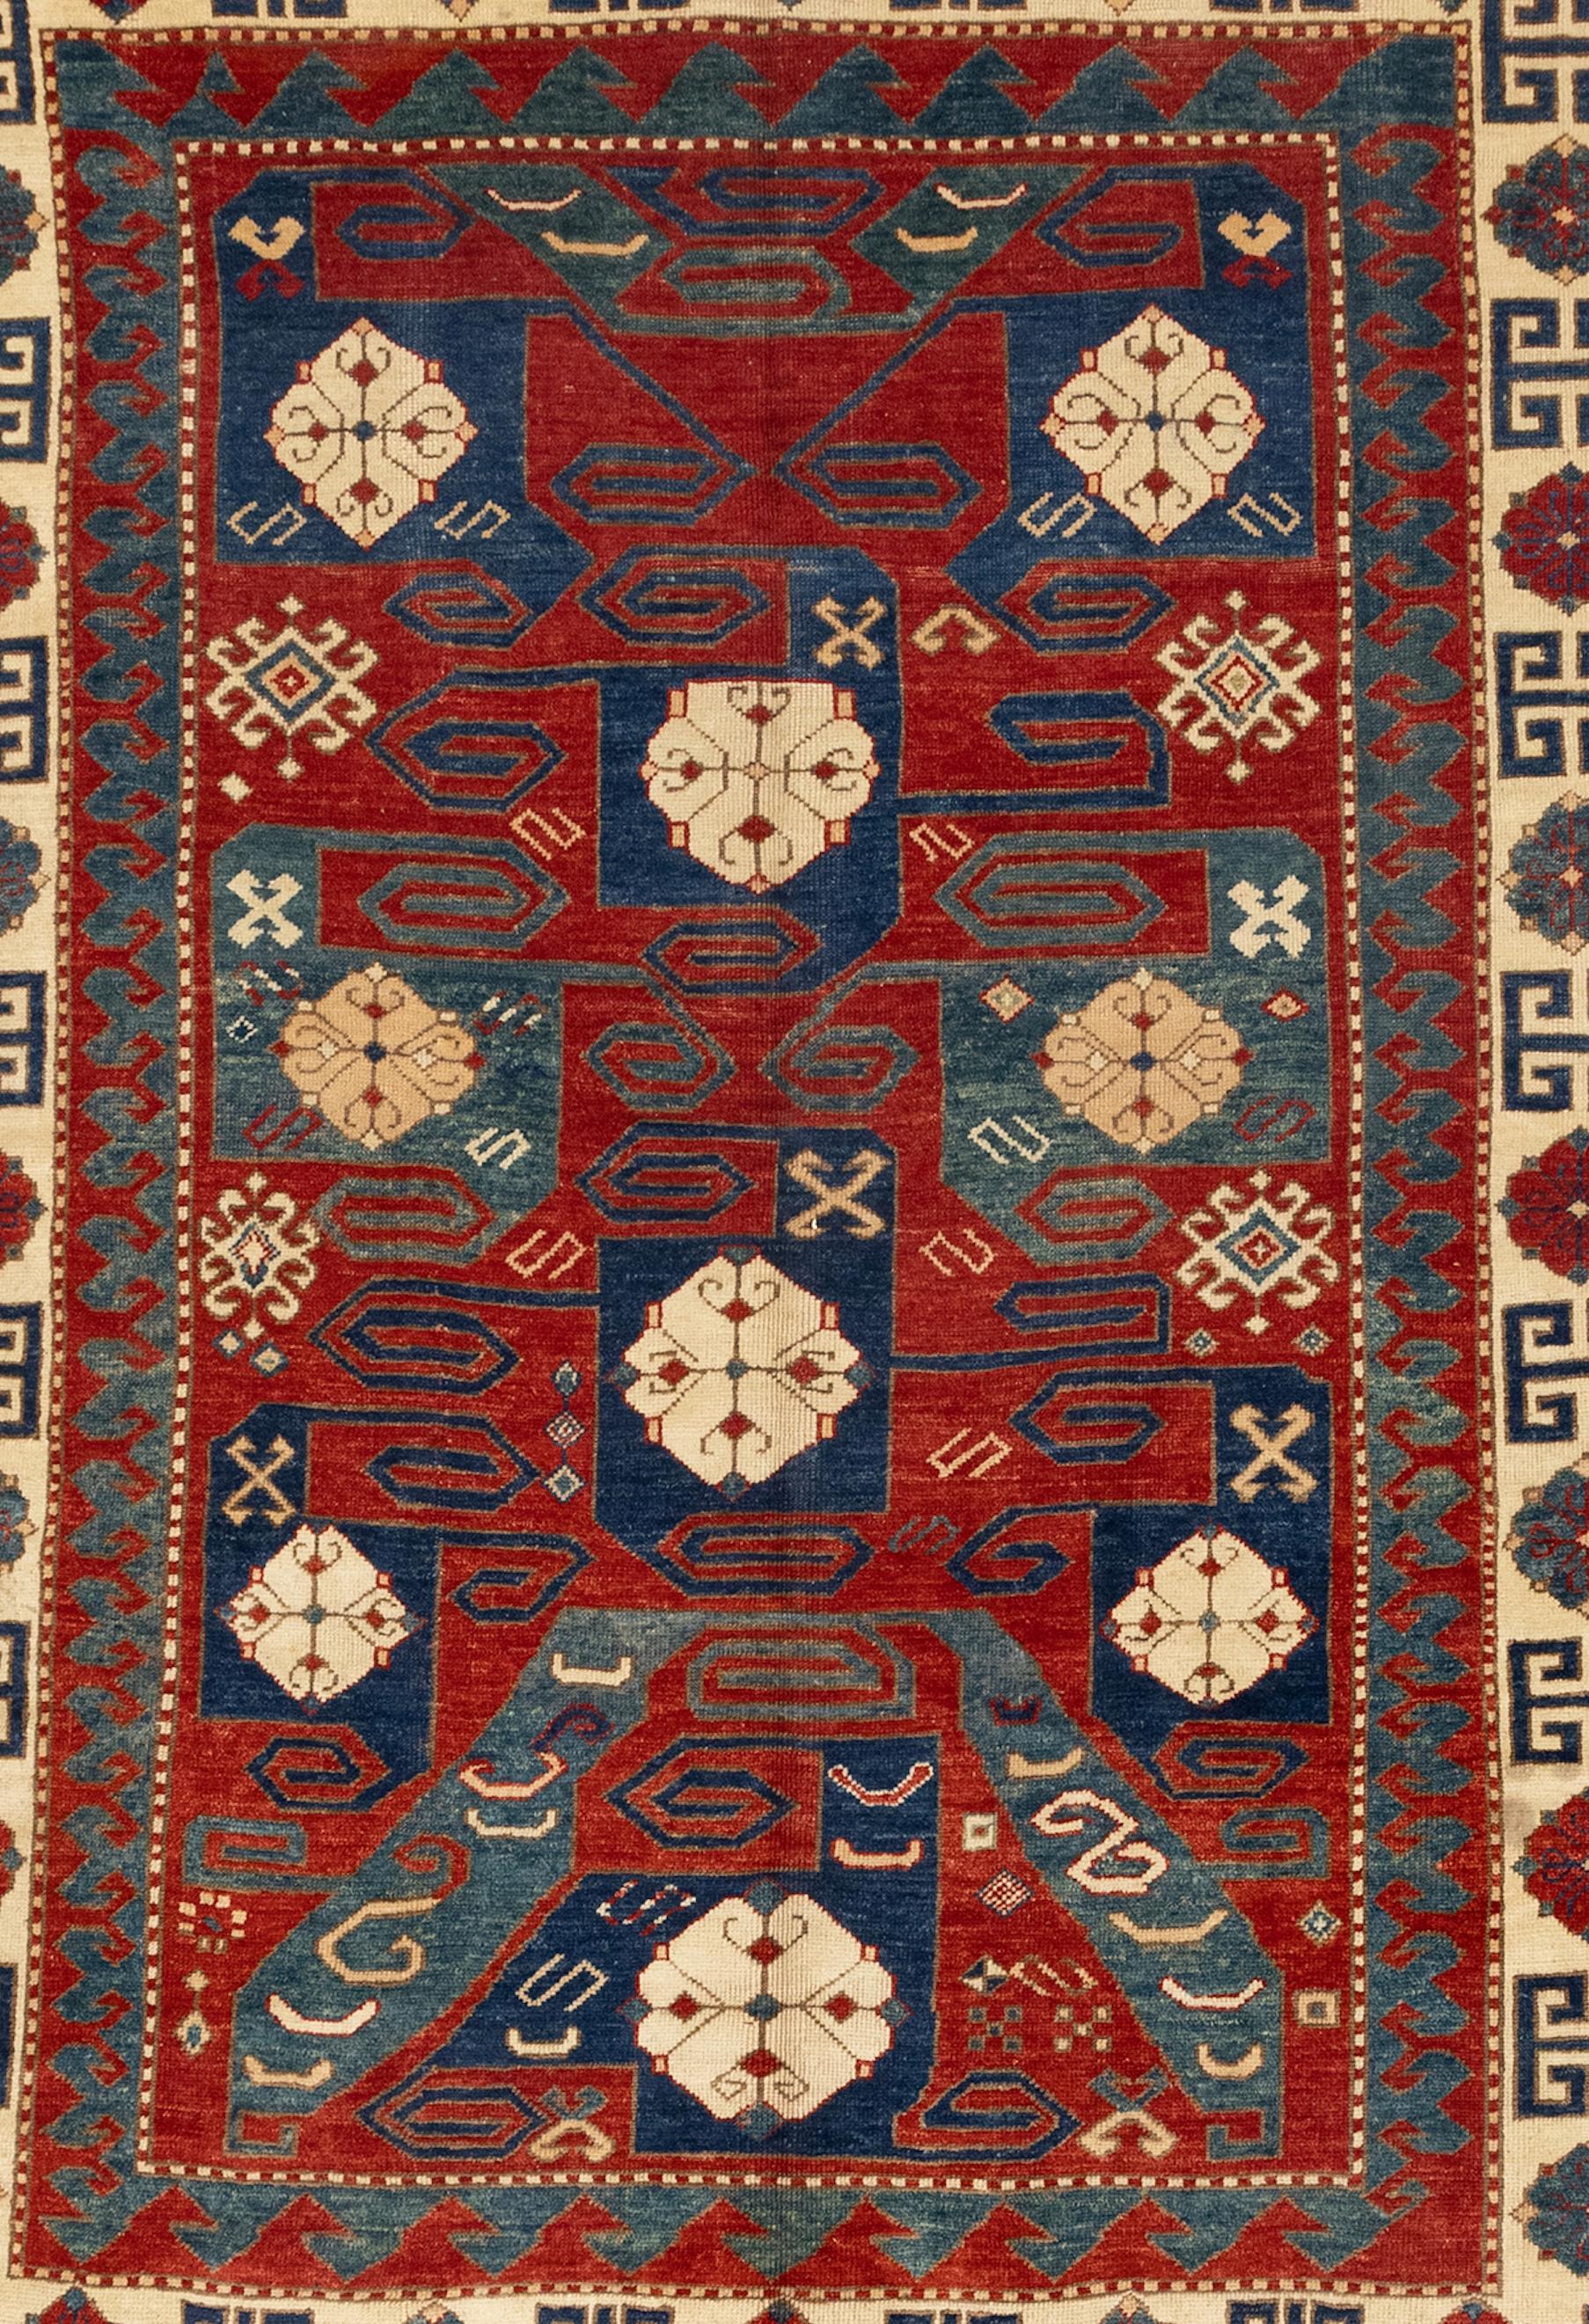 Central Asian 19th Century Pinwheel Kazak Inspired Rug For Sale